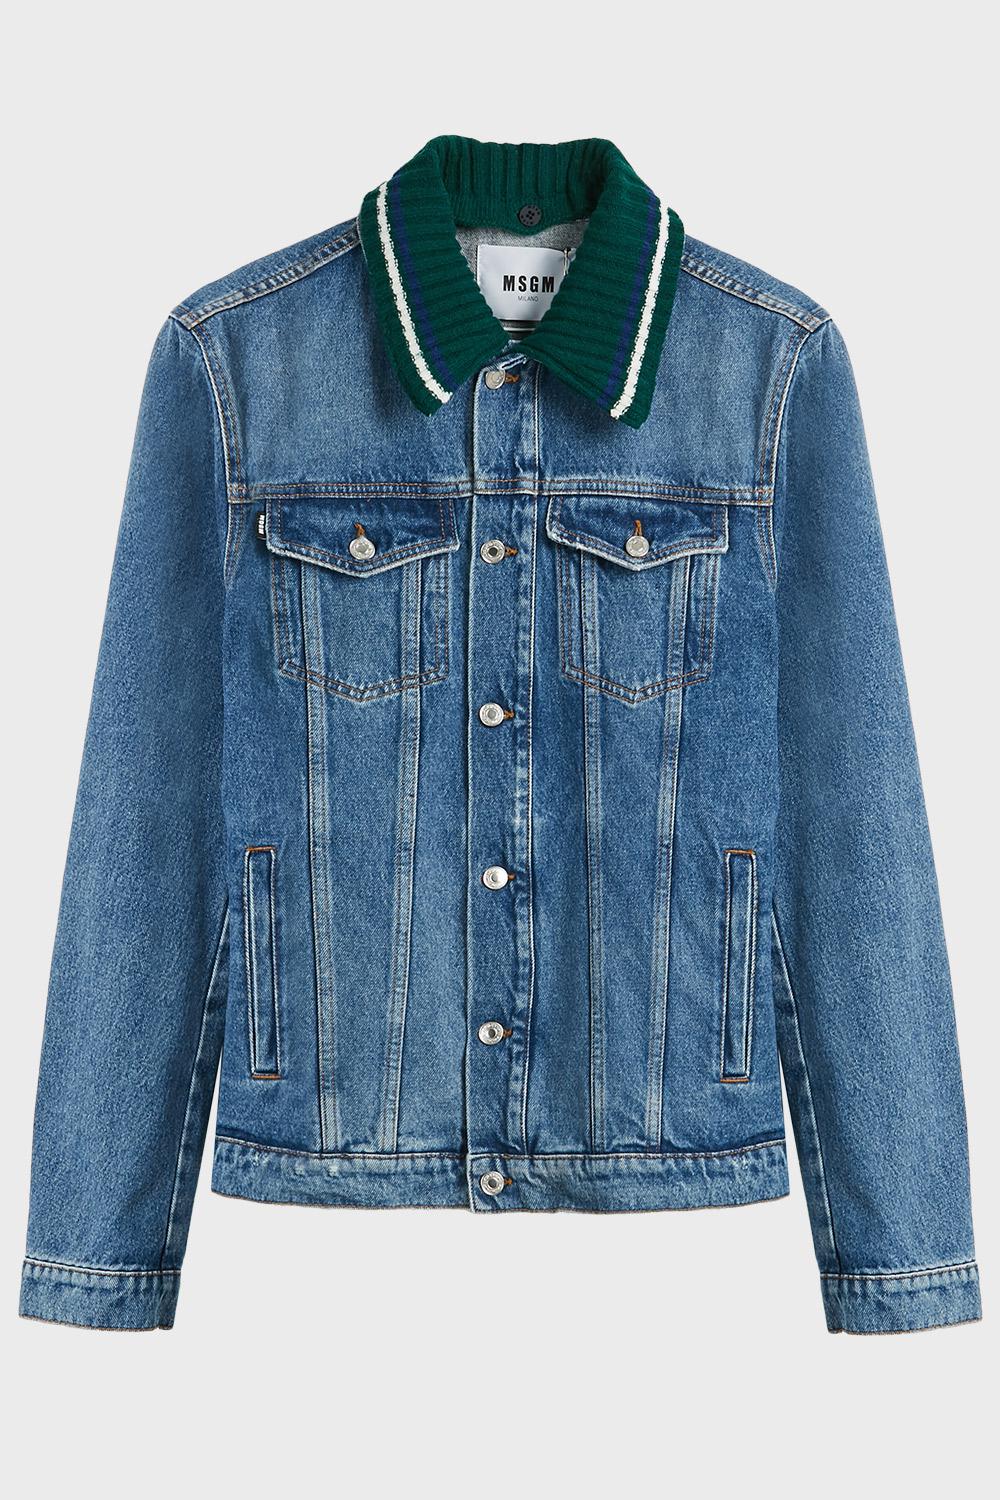 MSGM Wool Collar Denim Jacket in Blue for Men - Lyst